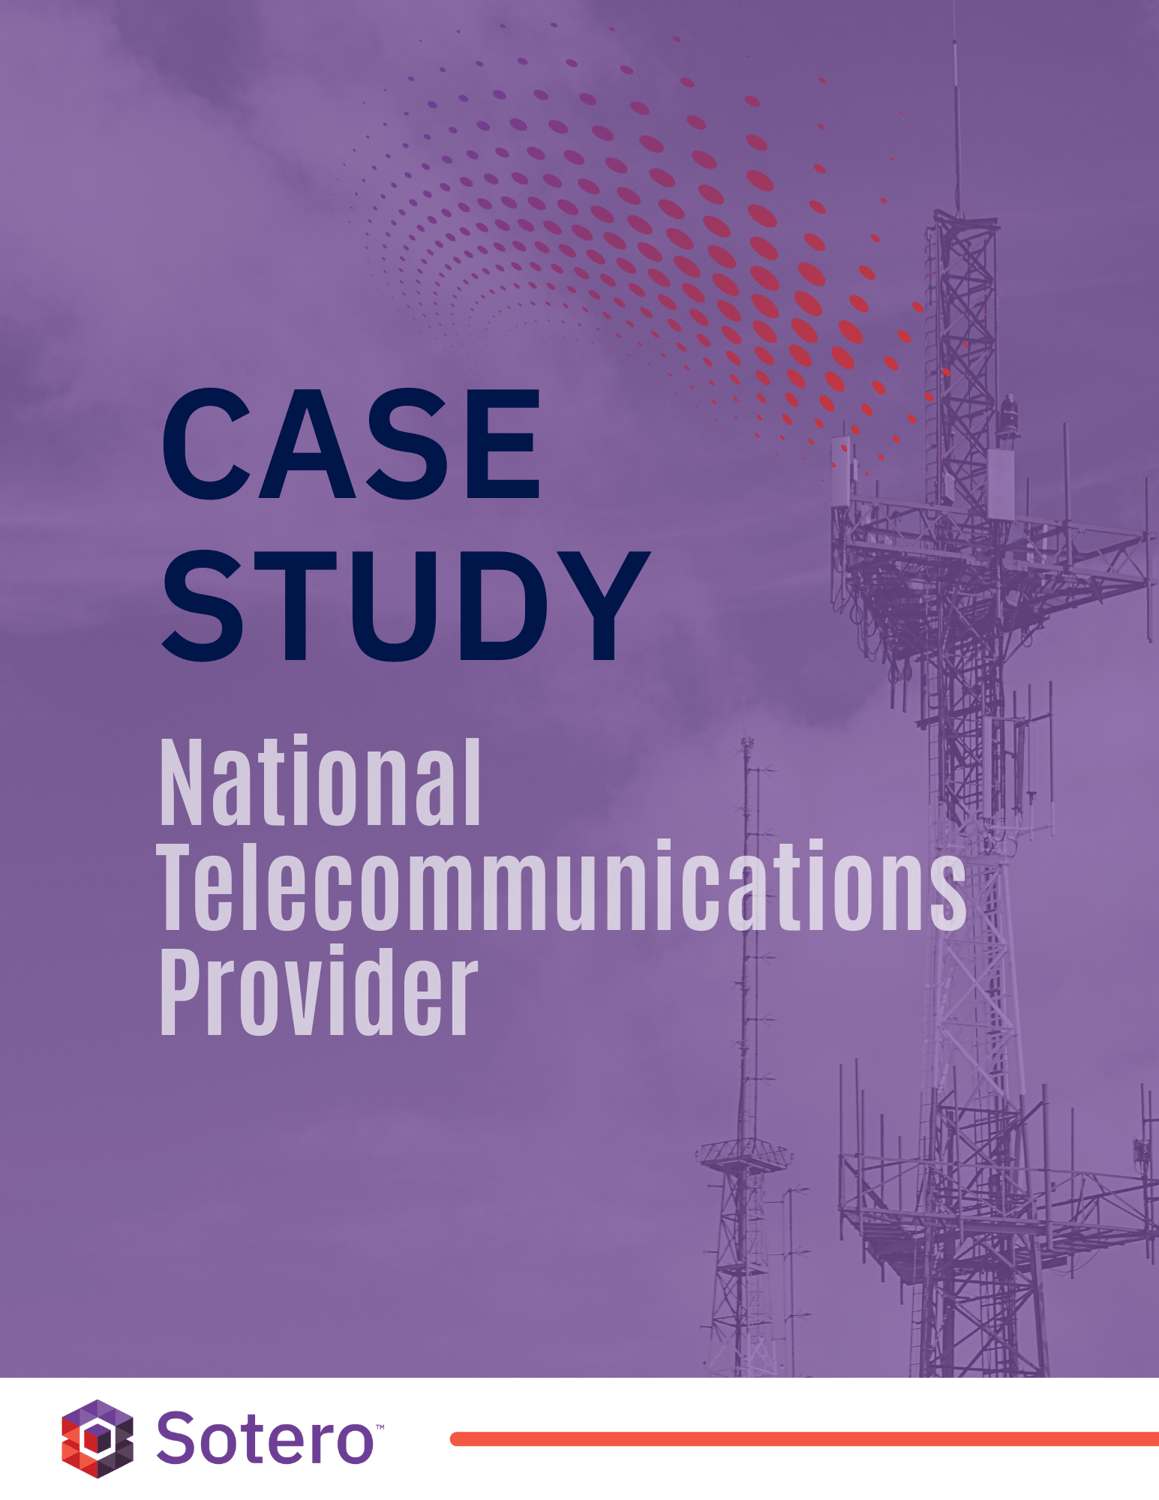 National Telecommunications Provider Sotero Case Study Thumbnail